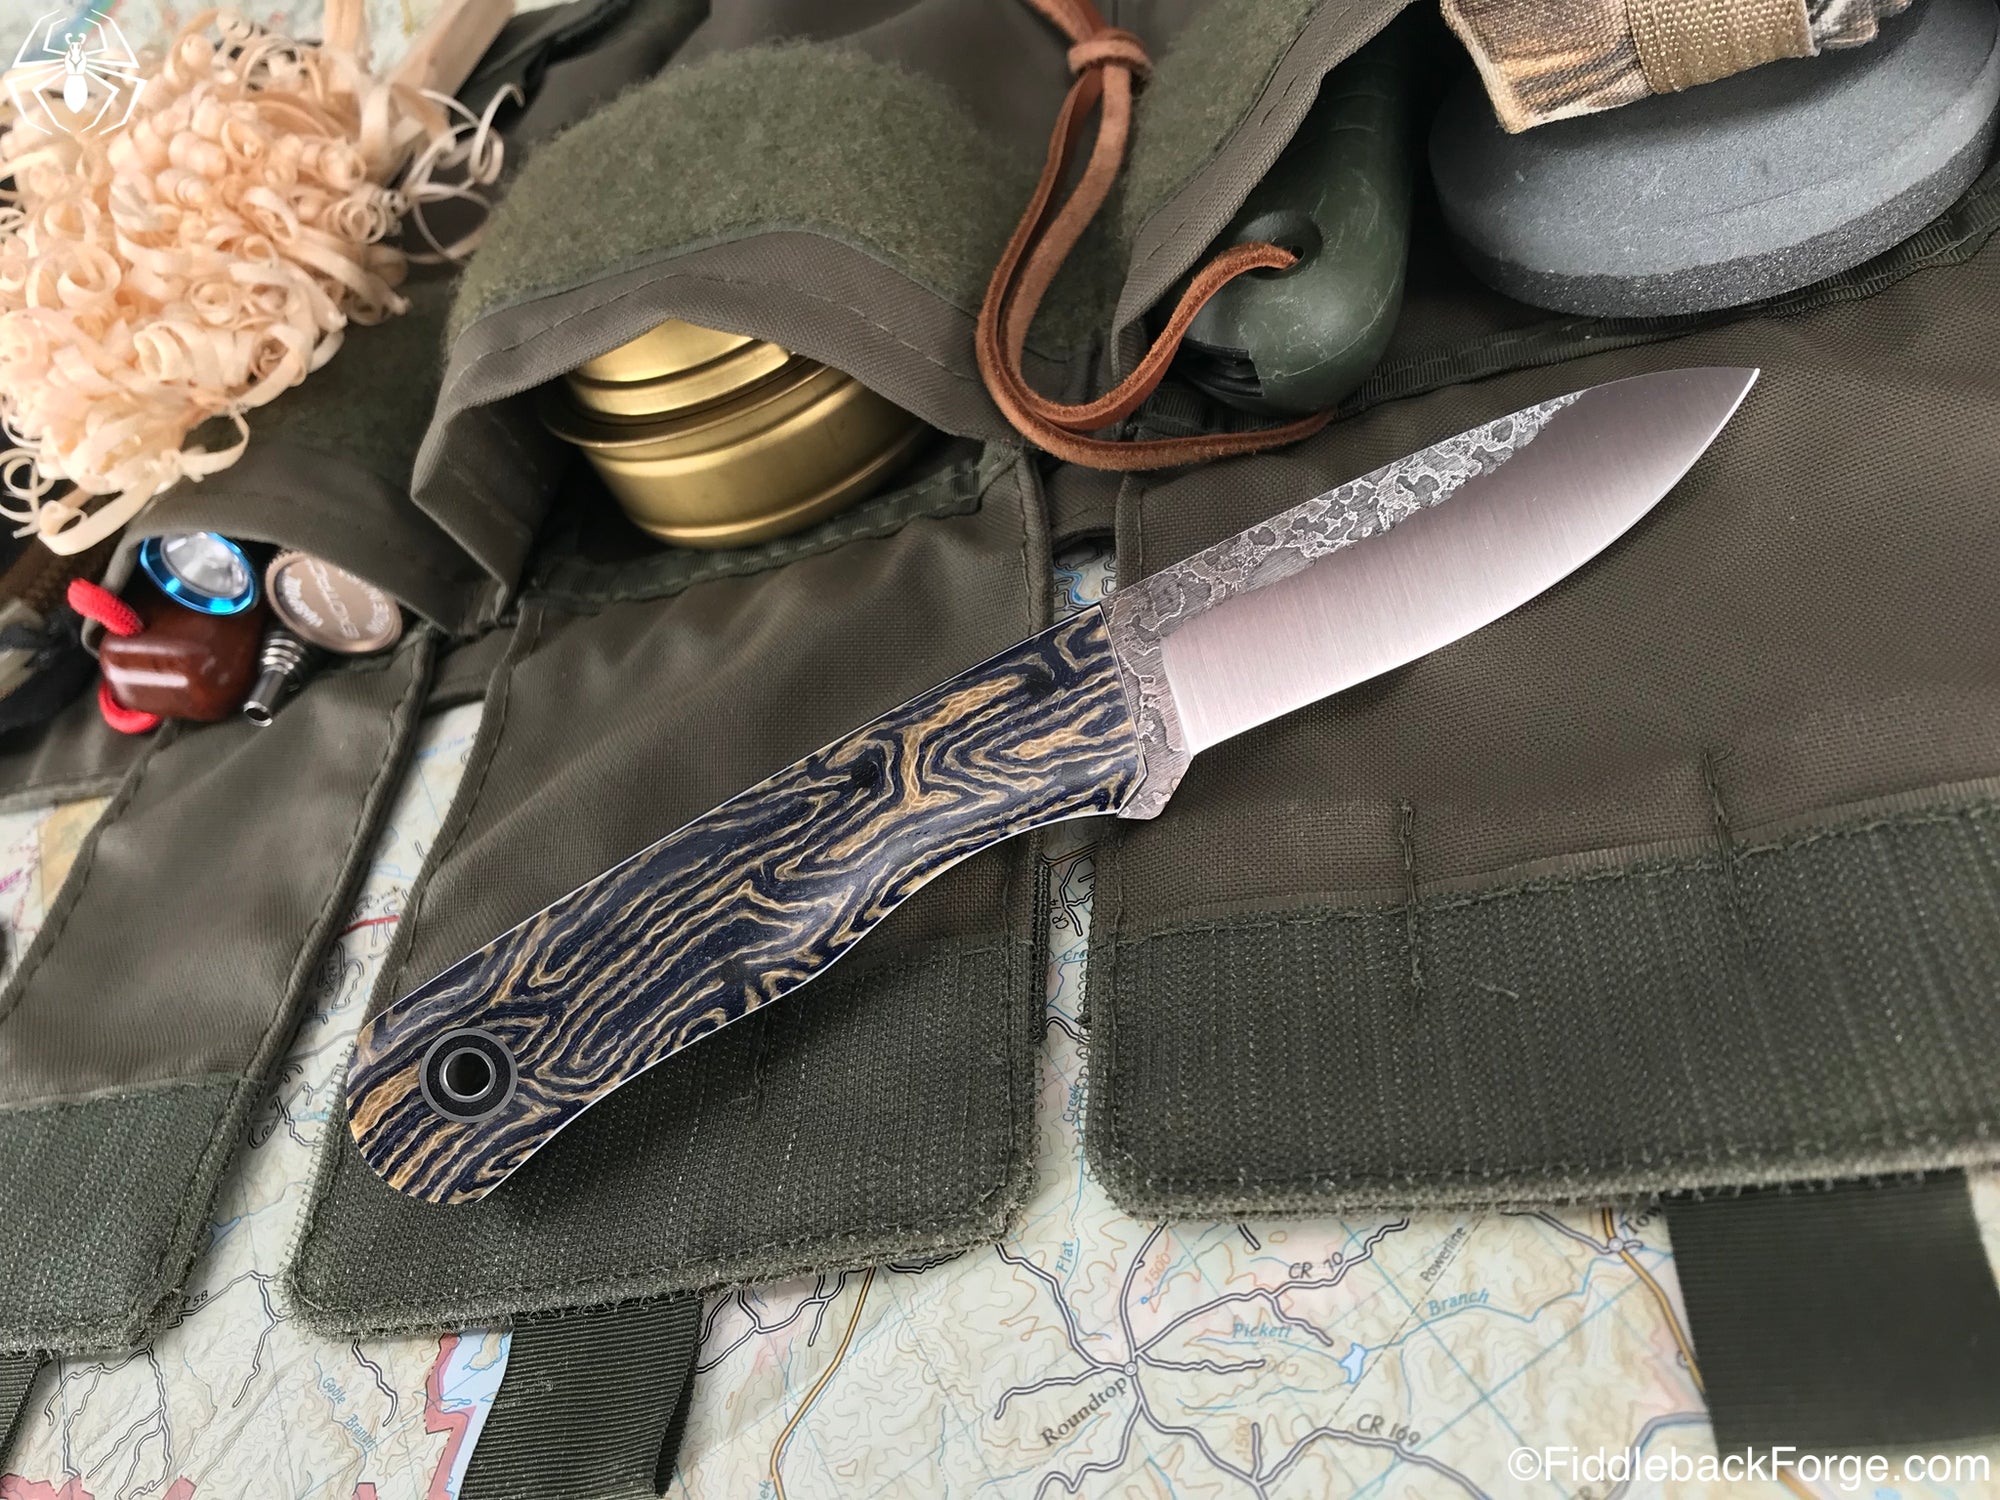 Fiddleback Forge Pack Rat - Model Info - Fiddleback Forge Handmade Knife